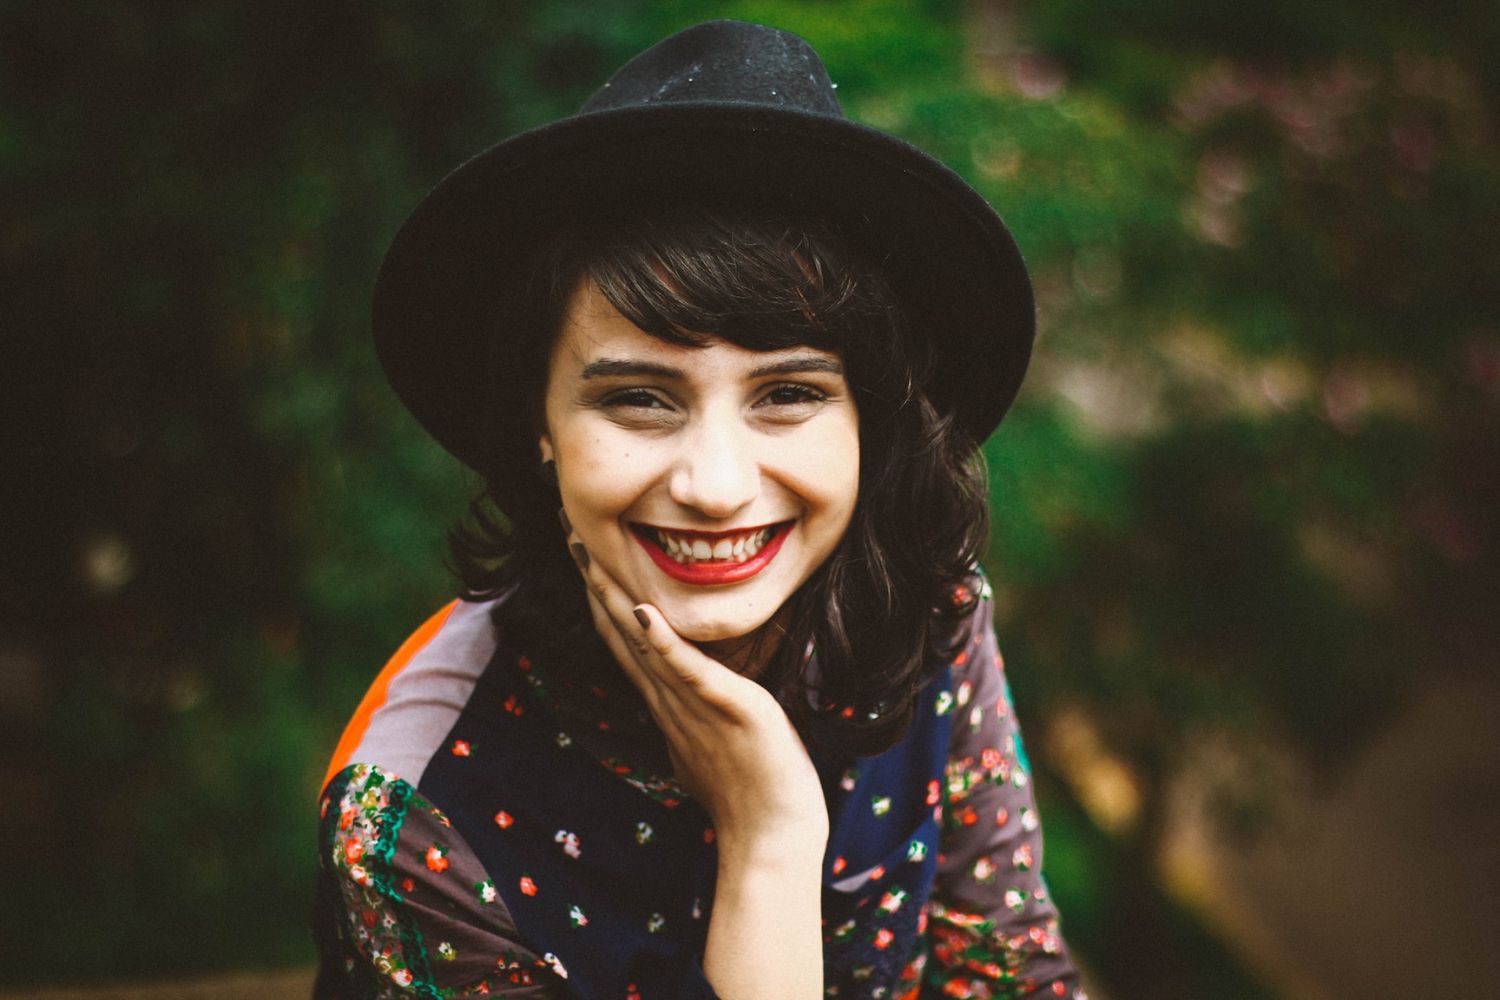 natural smiling female portrait Photo by Allef Vinicius on Unsplash